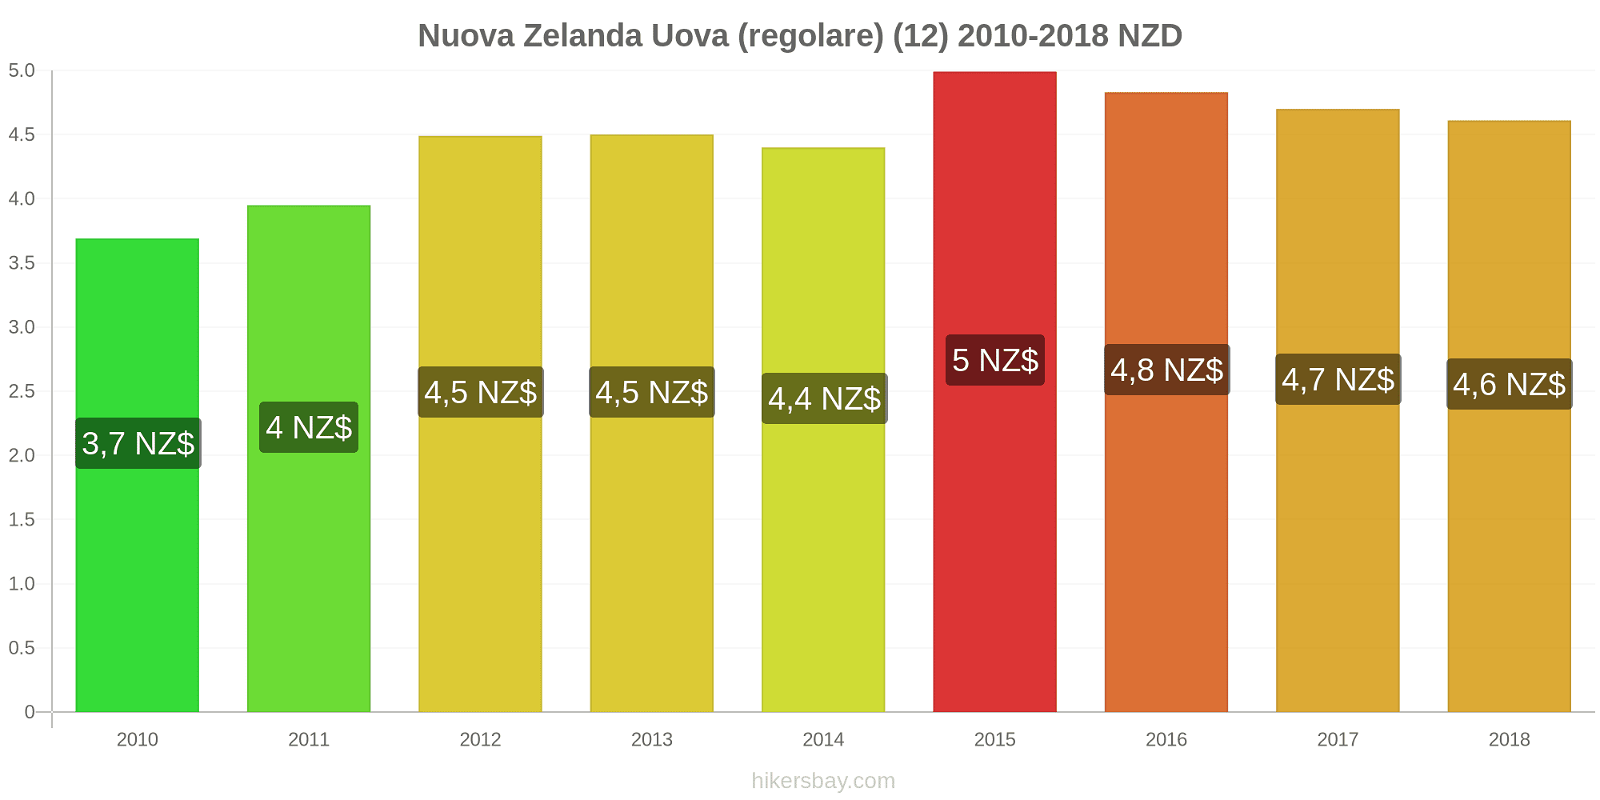 Nuova Zelanda cambi di prezzo Uova (normali) (12) hikersbay.com